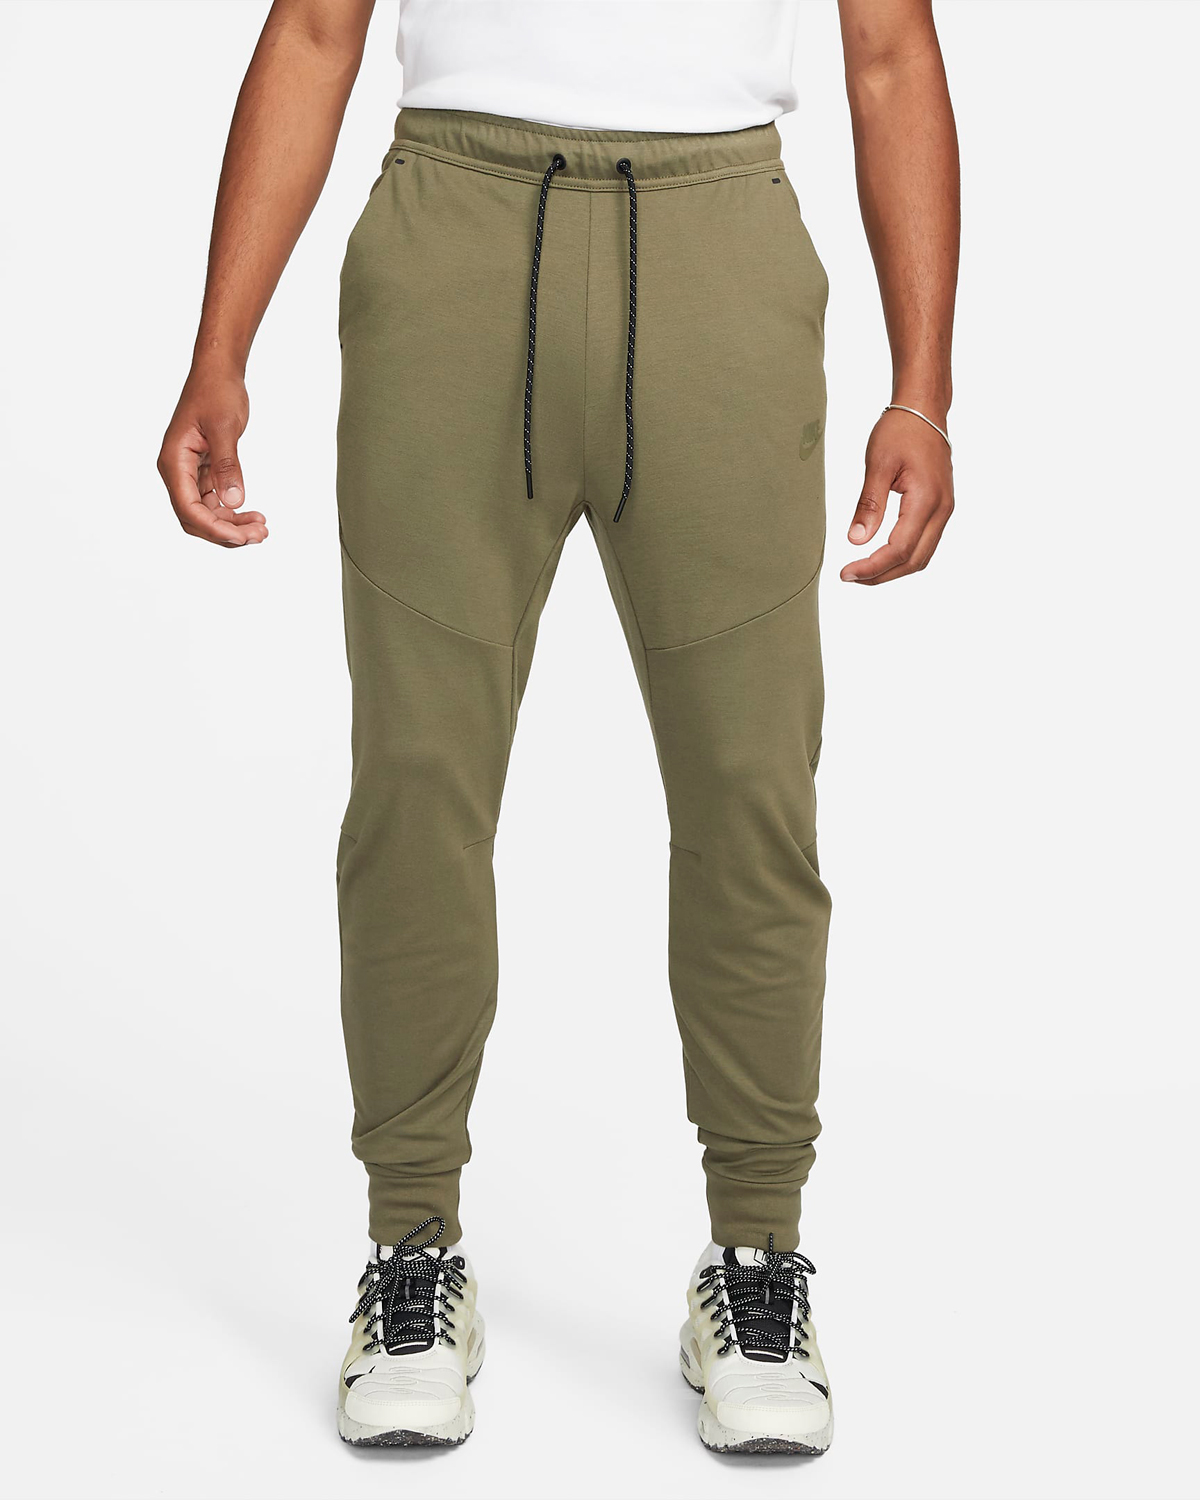 Nike-Tech-Fleece-Lightweight-Jogger-Pants-Medium-Olive